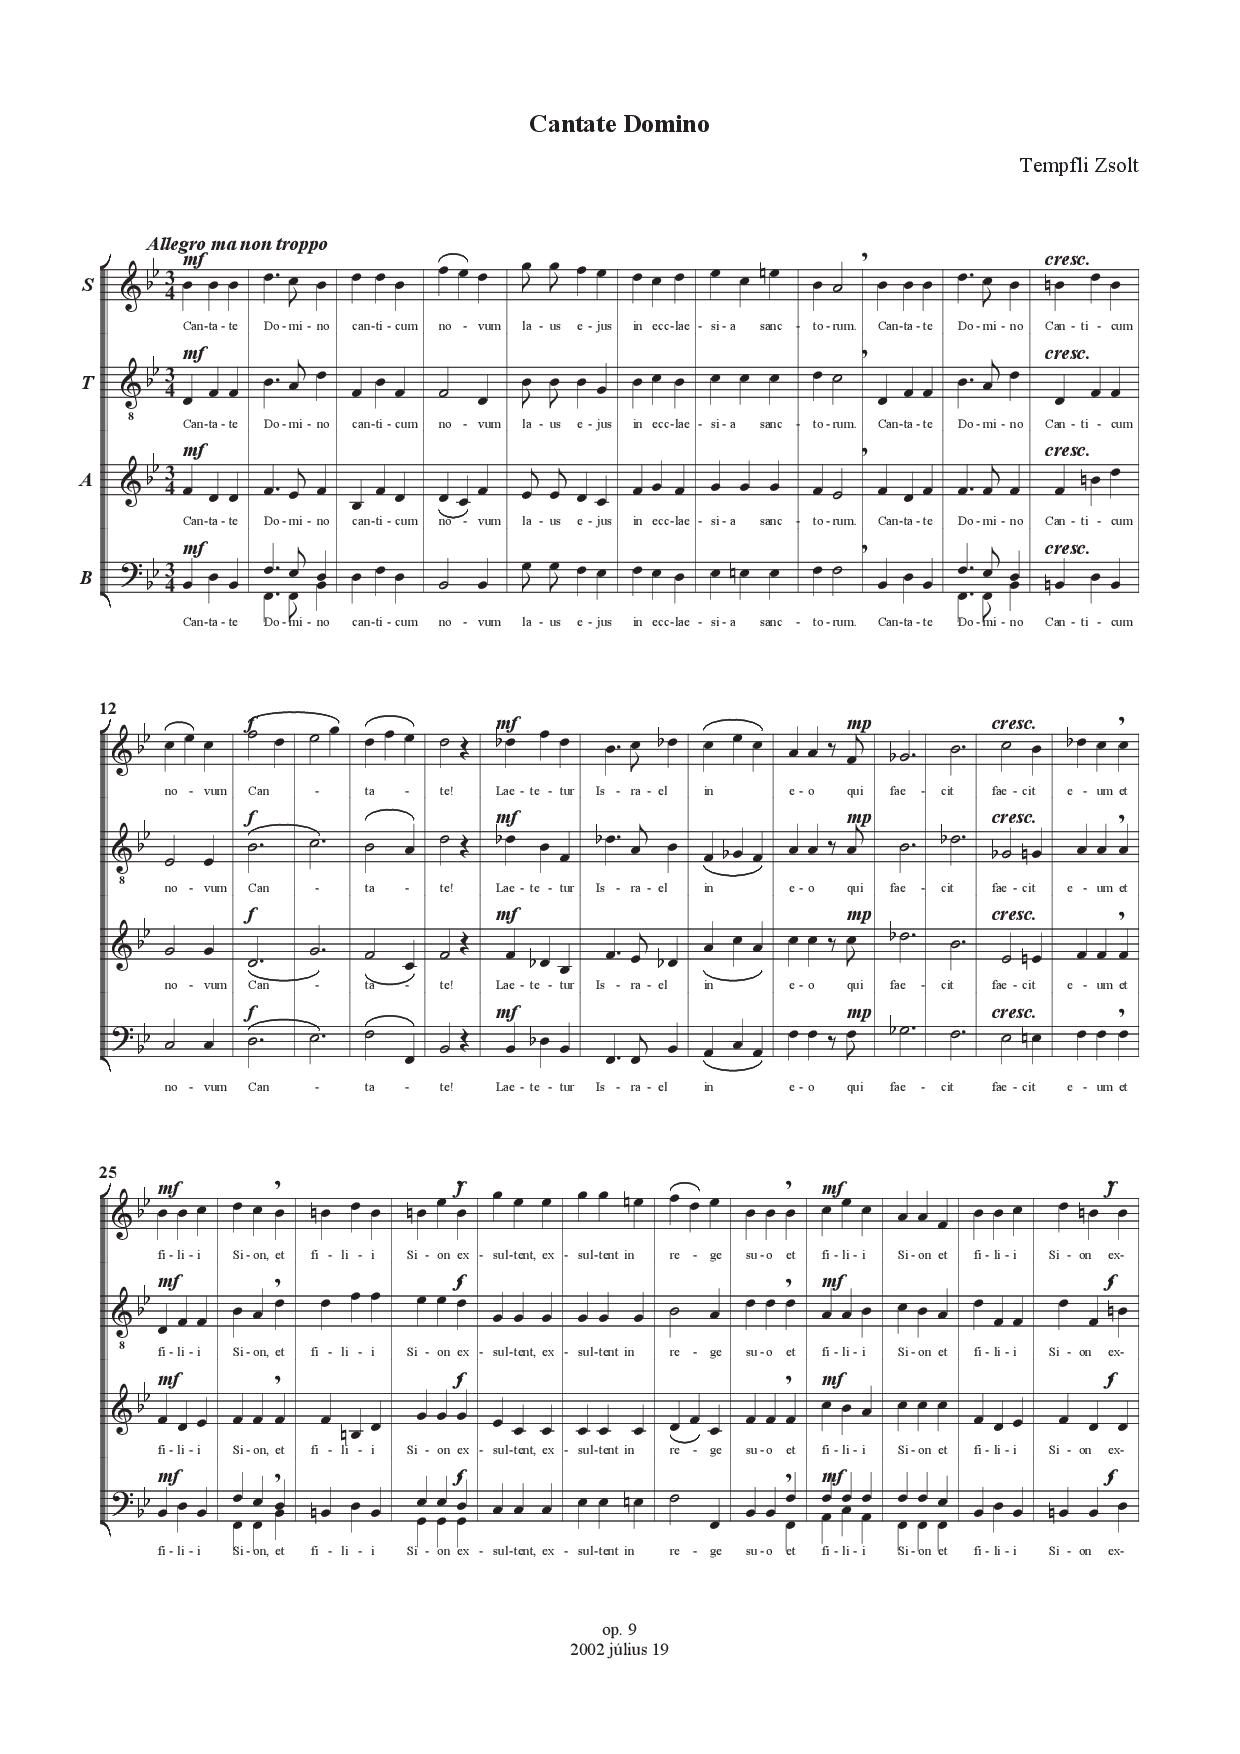 Tempfli Zsolt: Cantate Domino op. 7 vegyeskarra (SATB)/></p>
					</div><!-- .entry-content -->
		
		<footer class=